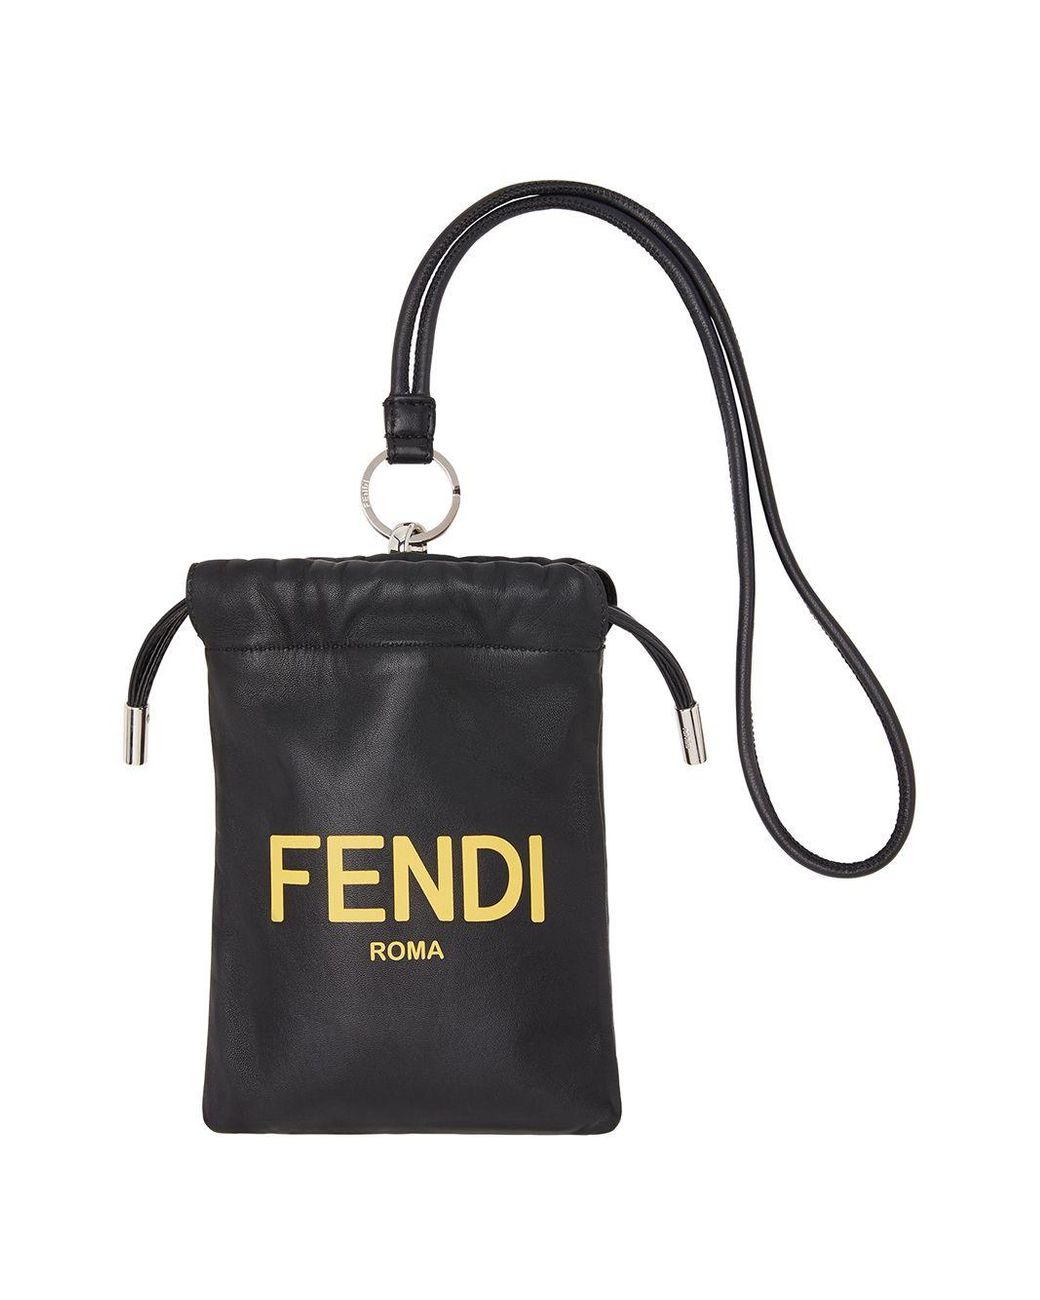 Fendi Logo Print Phone Pouch in Black for Men - Lyst